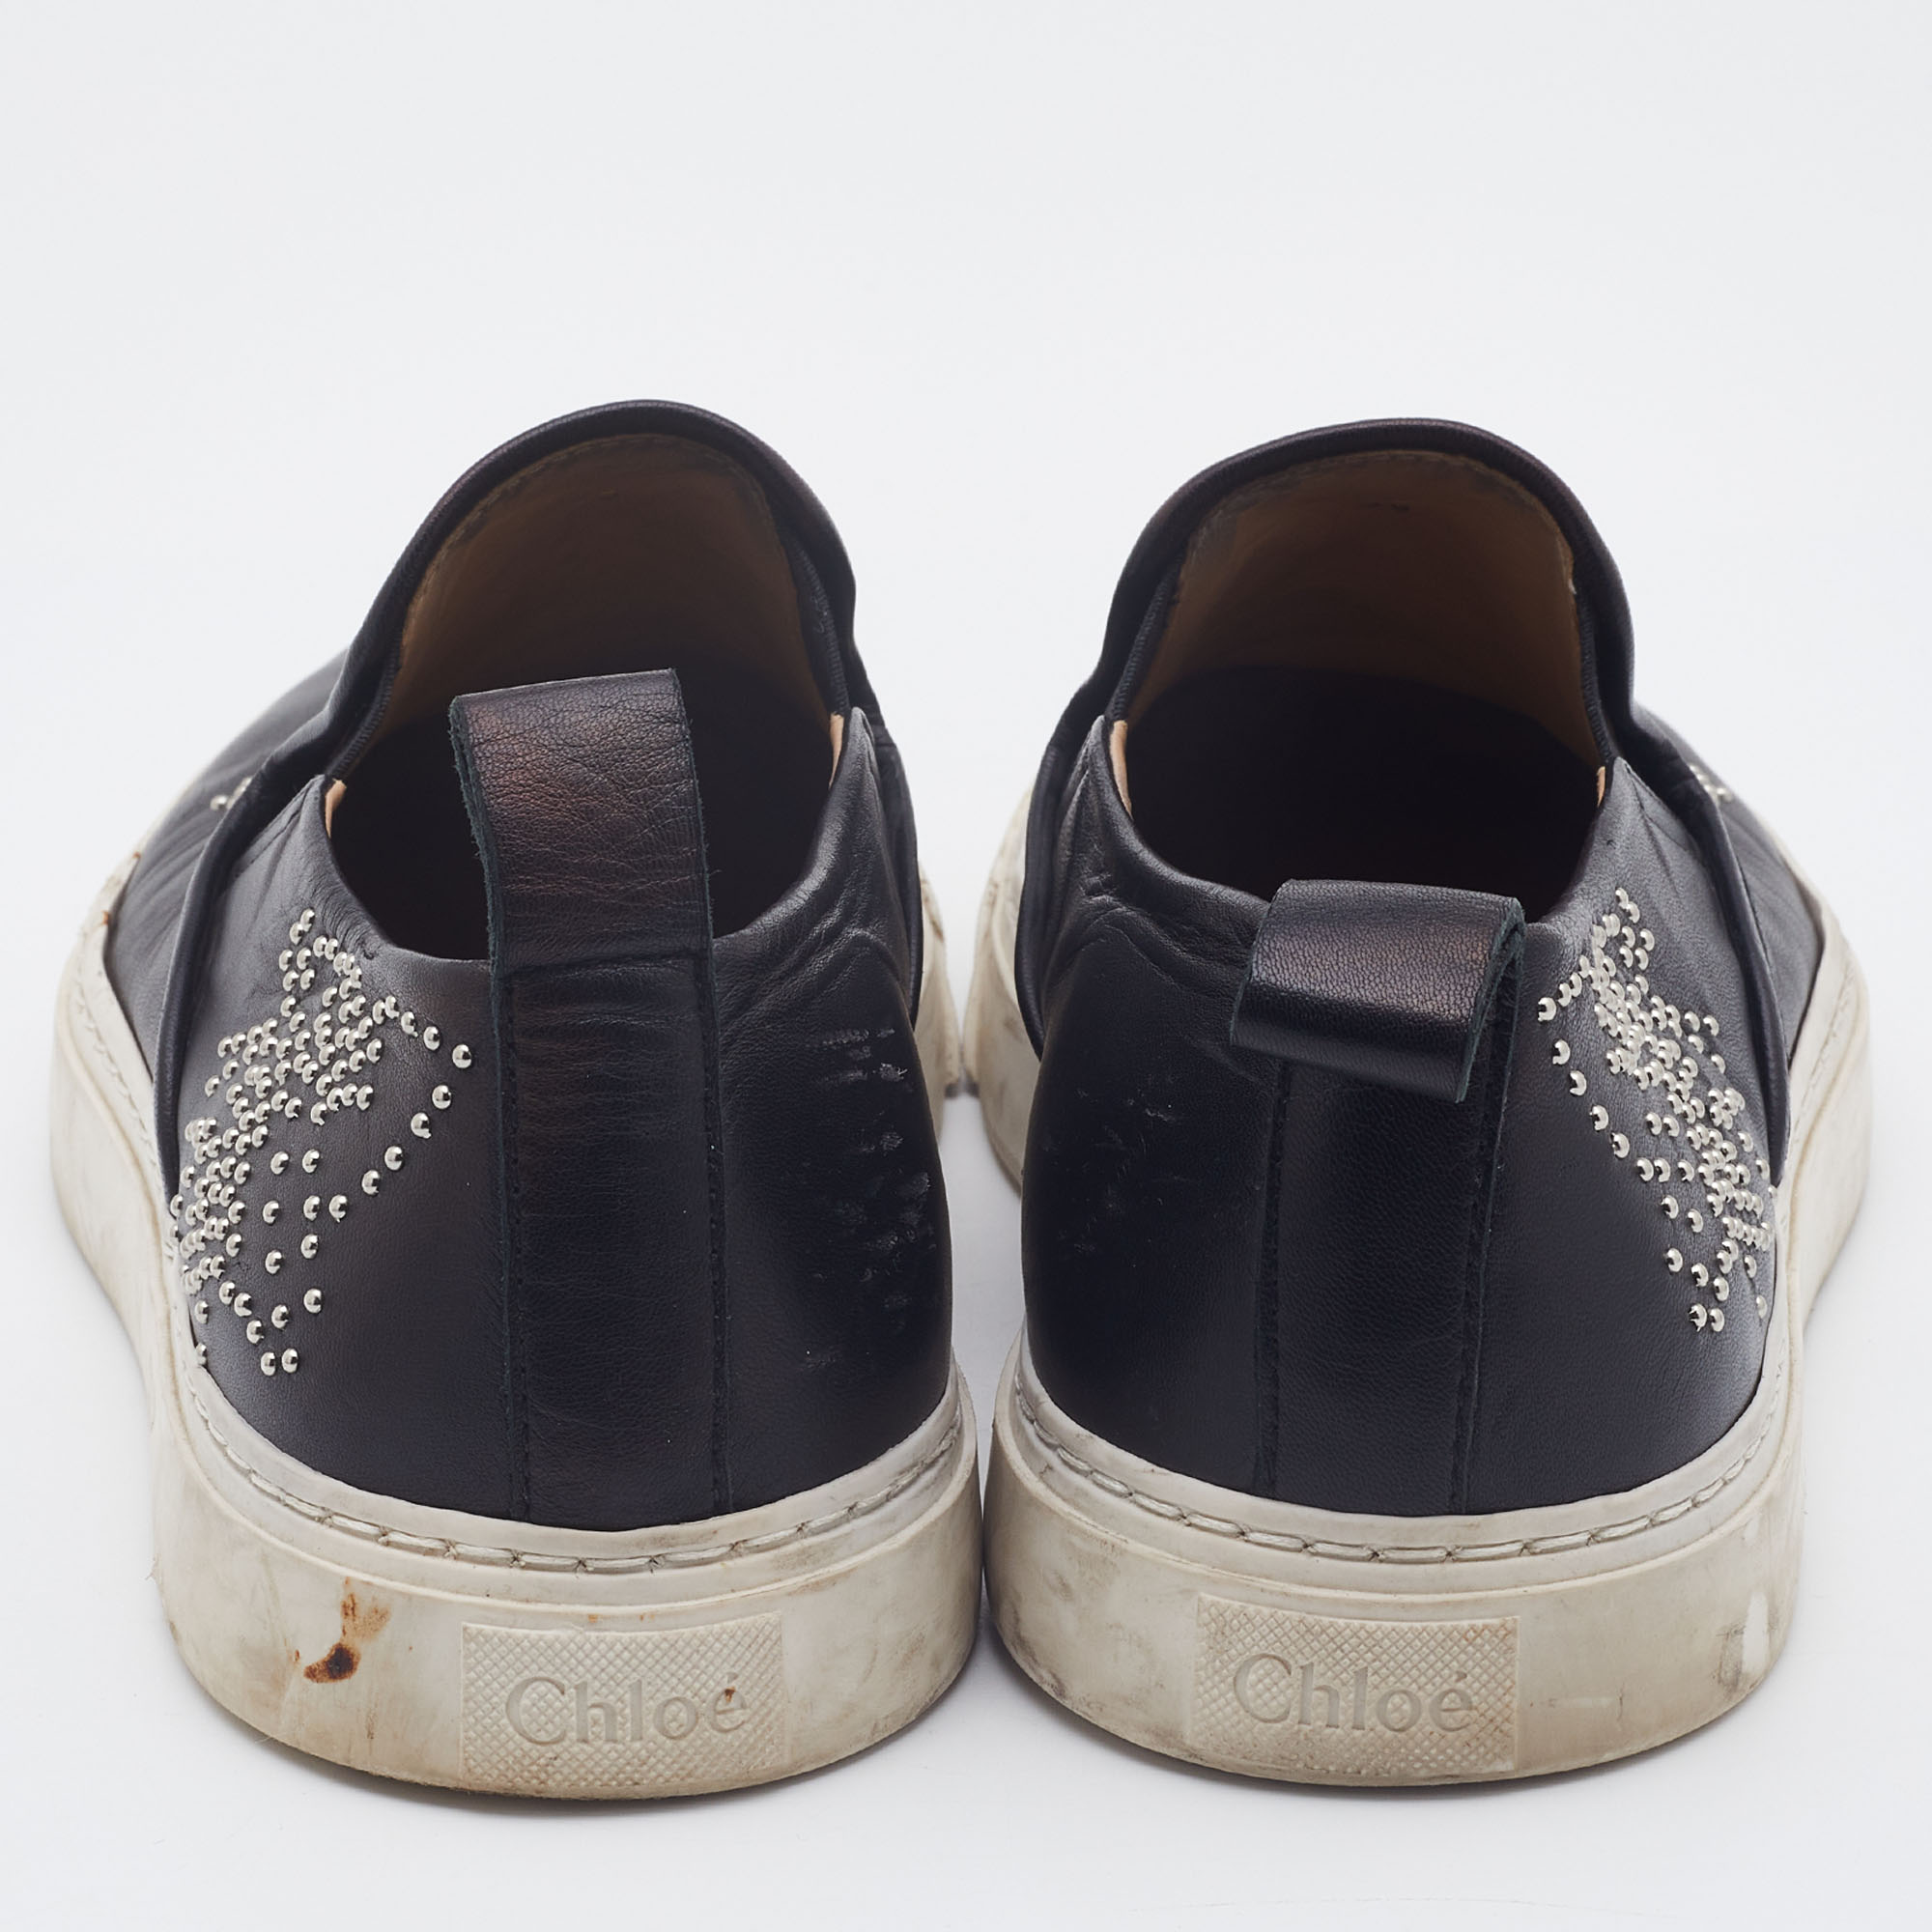 Chloe Black Studded Leather Susanna Slip On Sneakers Size 39